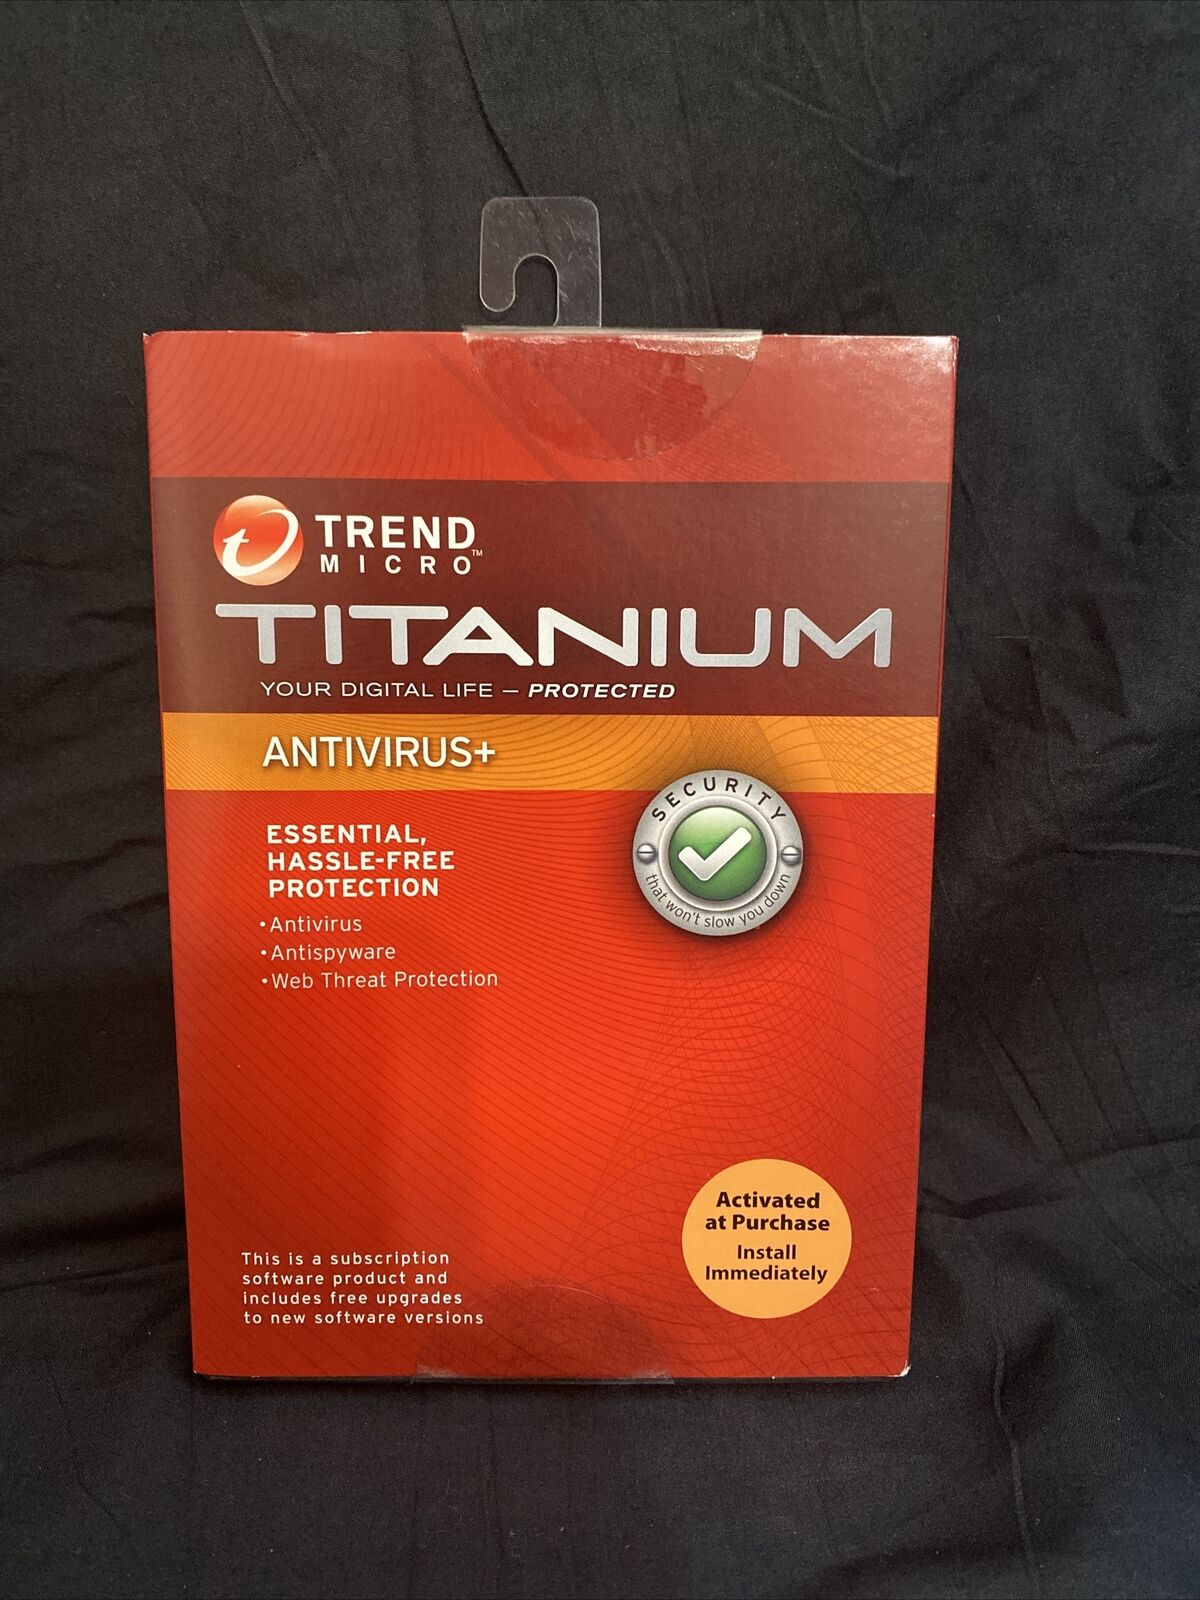 Trend Micro Titanium Antivirus+ Antispyware Web Threat Protection